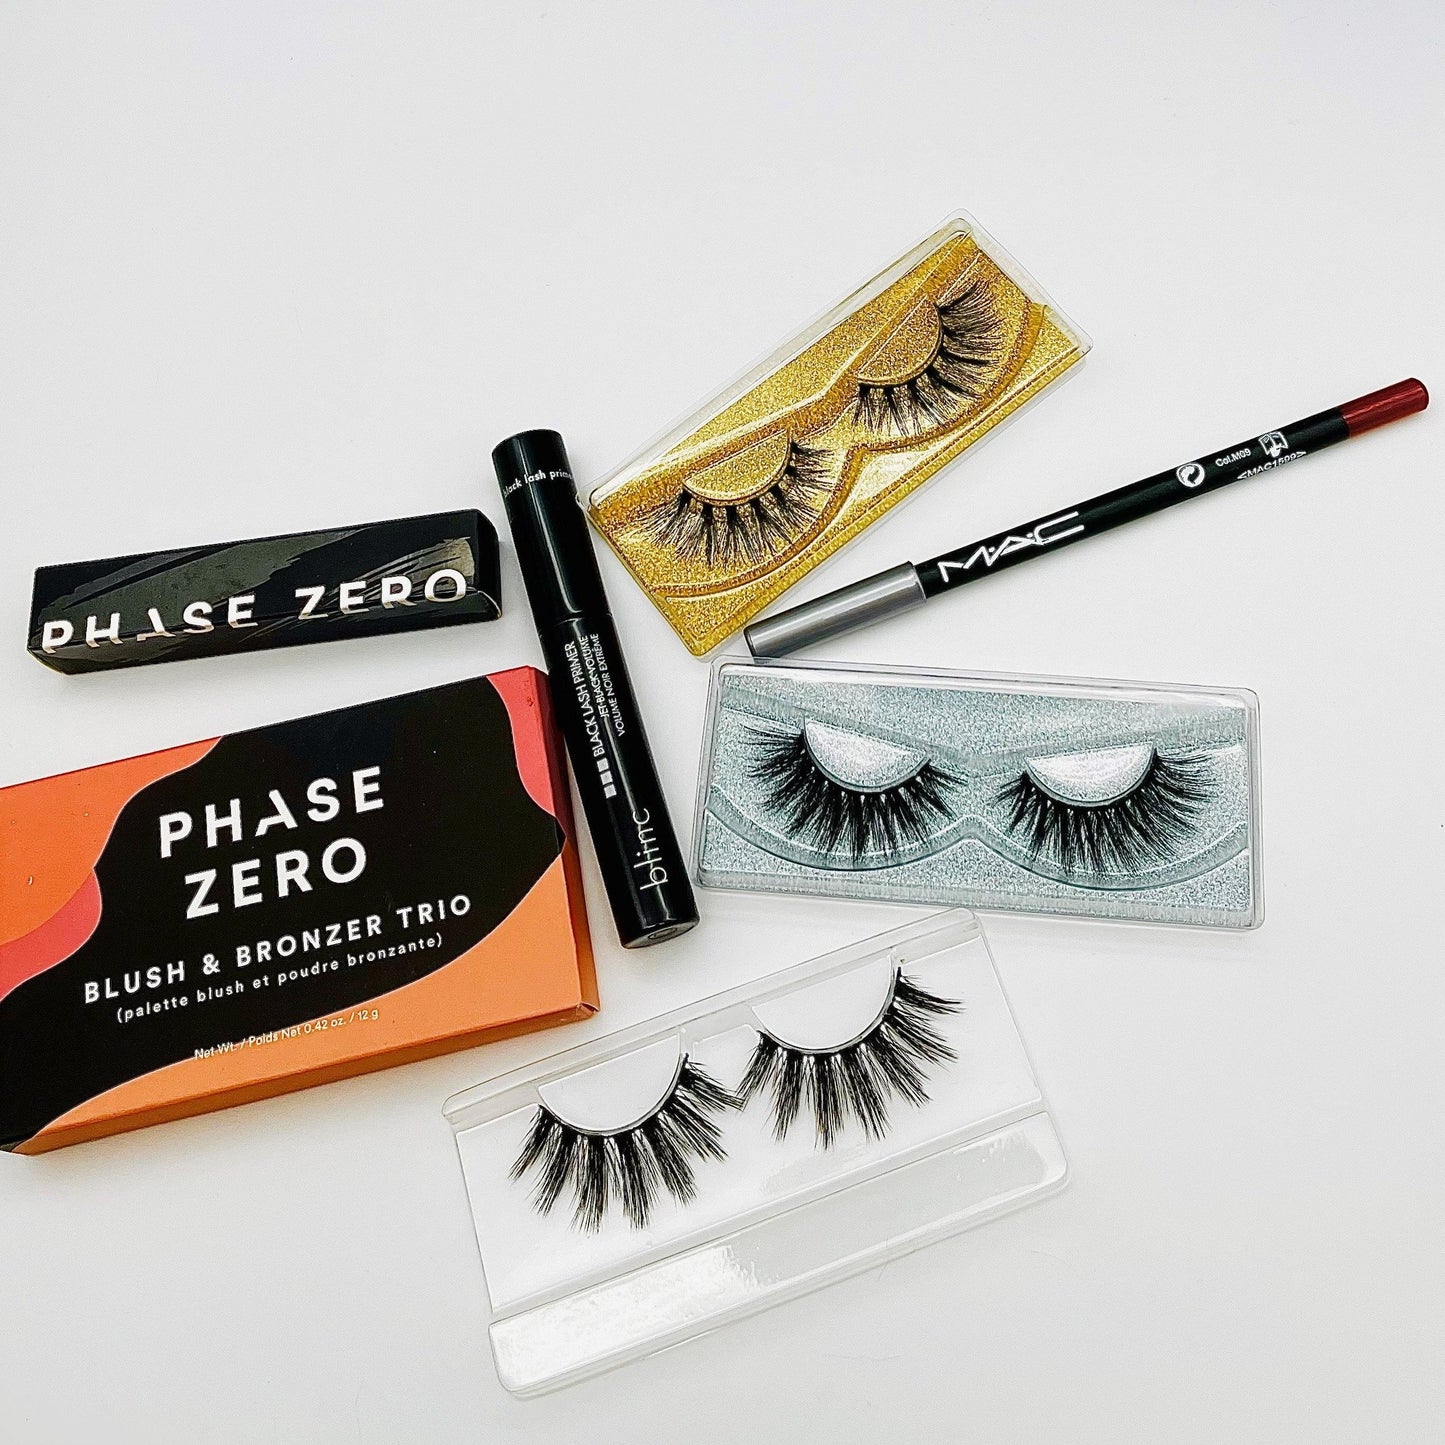 phase zero blush & bronzer palette set thats includes a mac makeup lip & eye liner combo, One phase zero matching lippi & one blinc mascara. 7 piece professional makeup bundle 